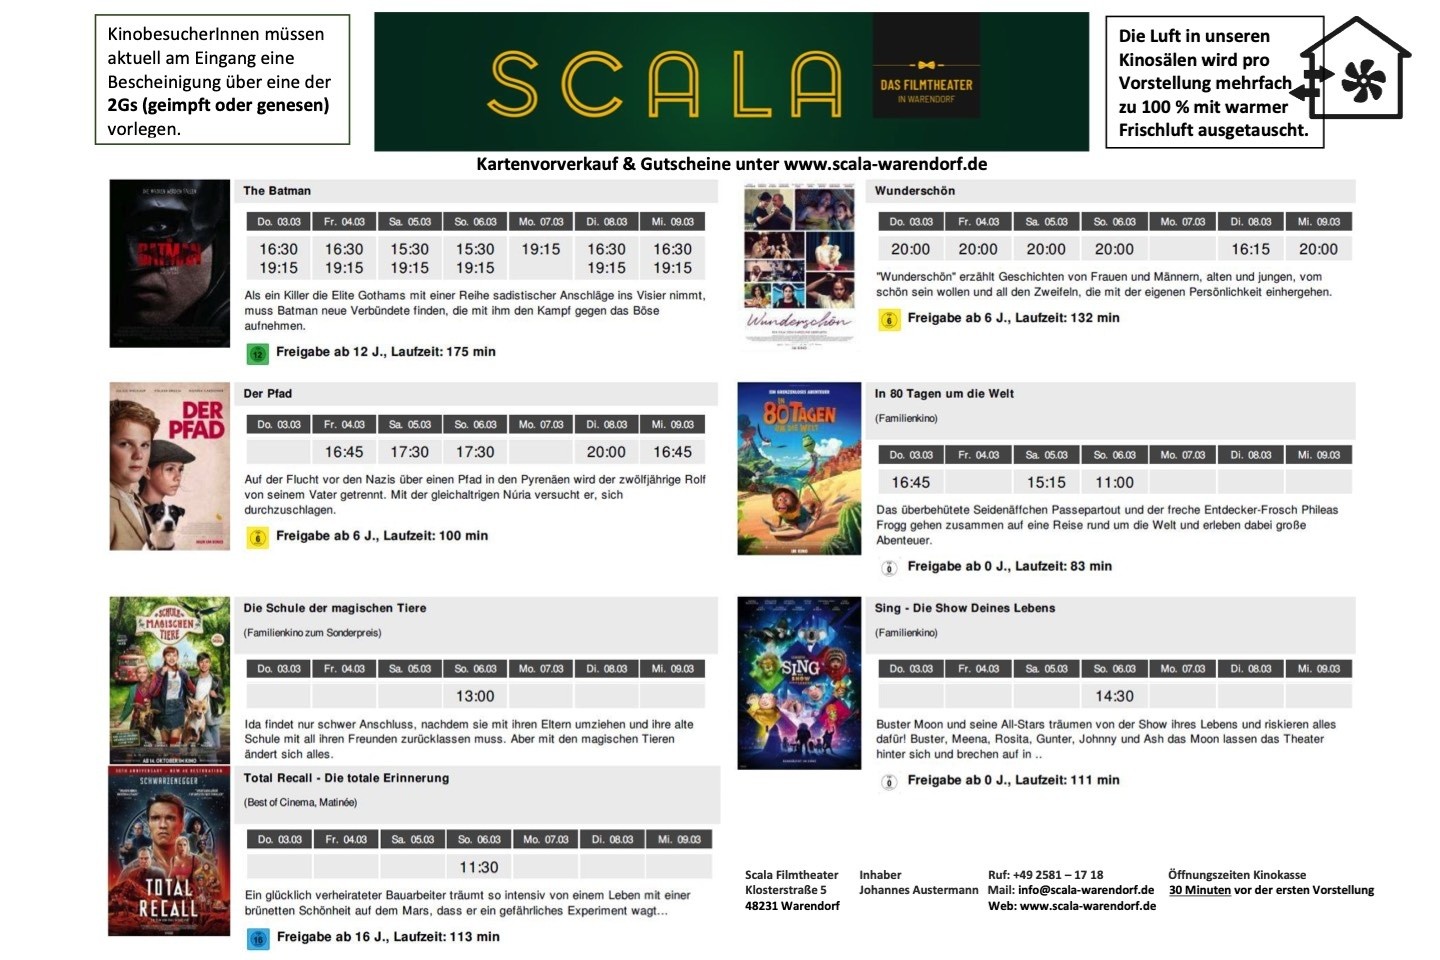 Kinoprogramm,Scala Filmtheater,Warendorf,Johannes Austermann